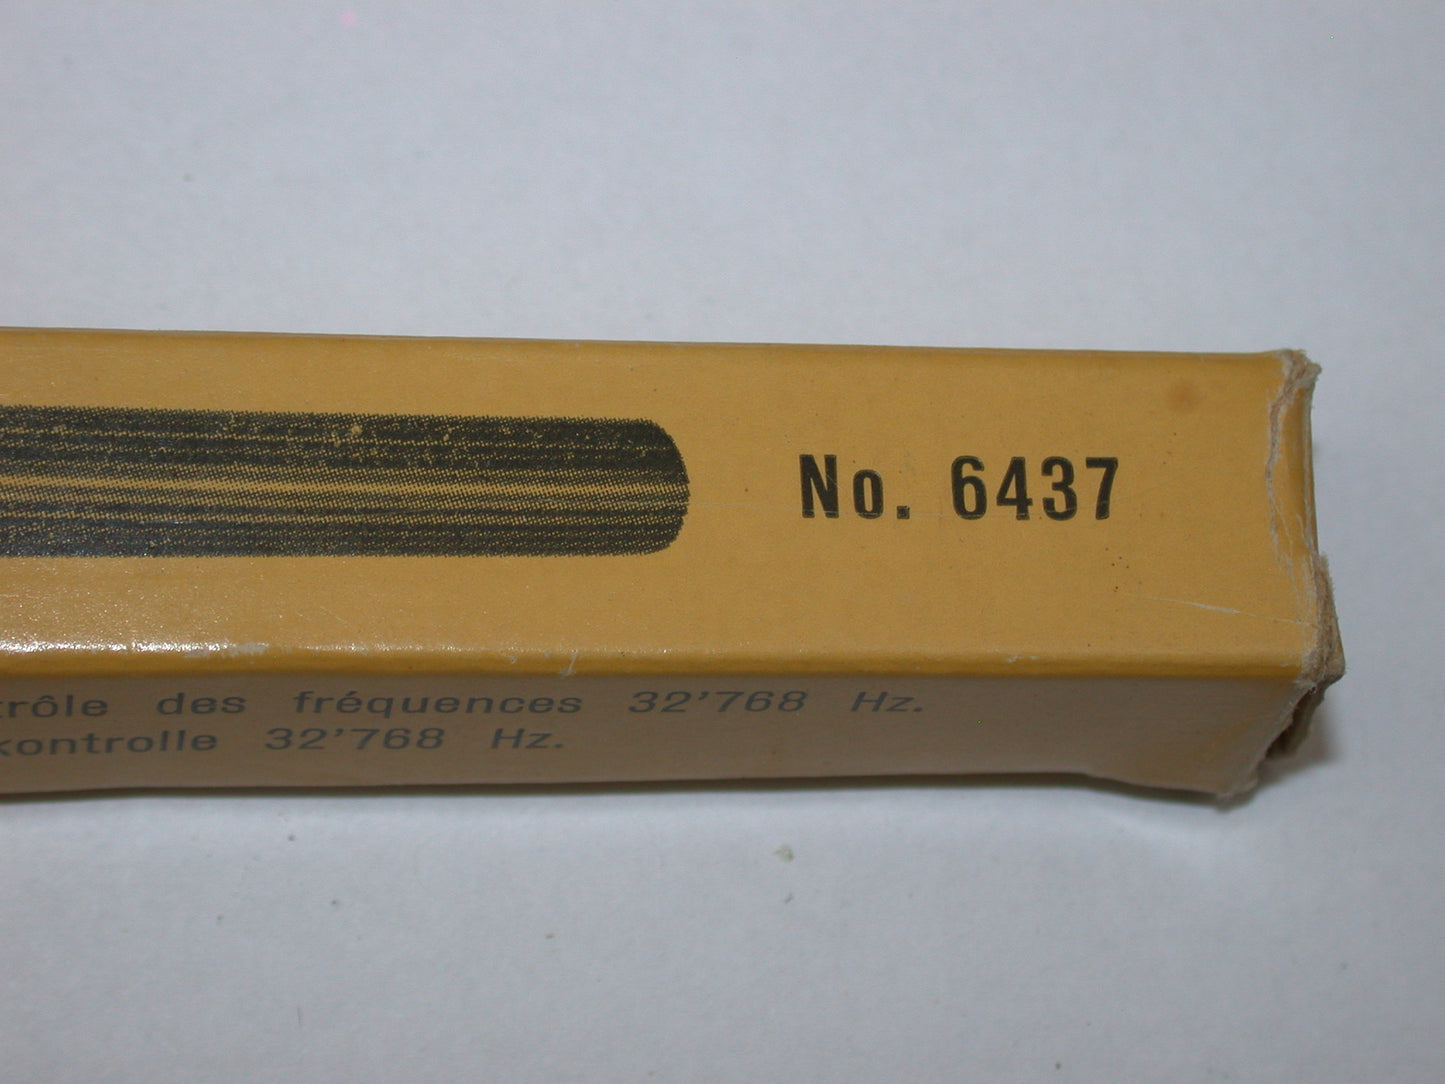 Lot 48- Bergeon No. 6437 Quartz Testing Pencil